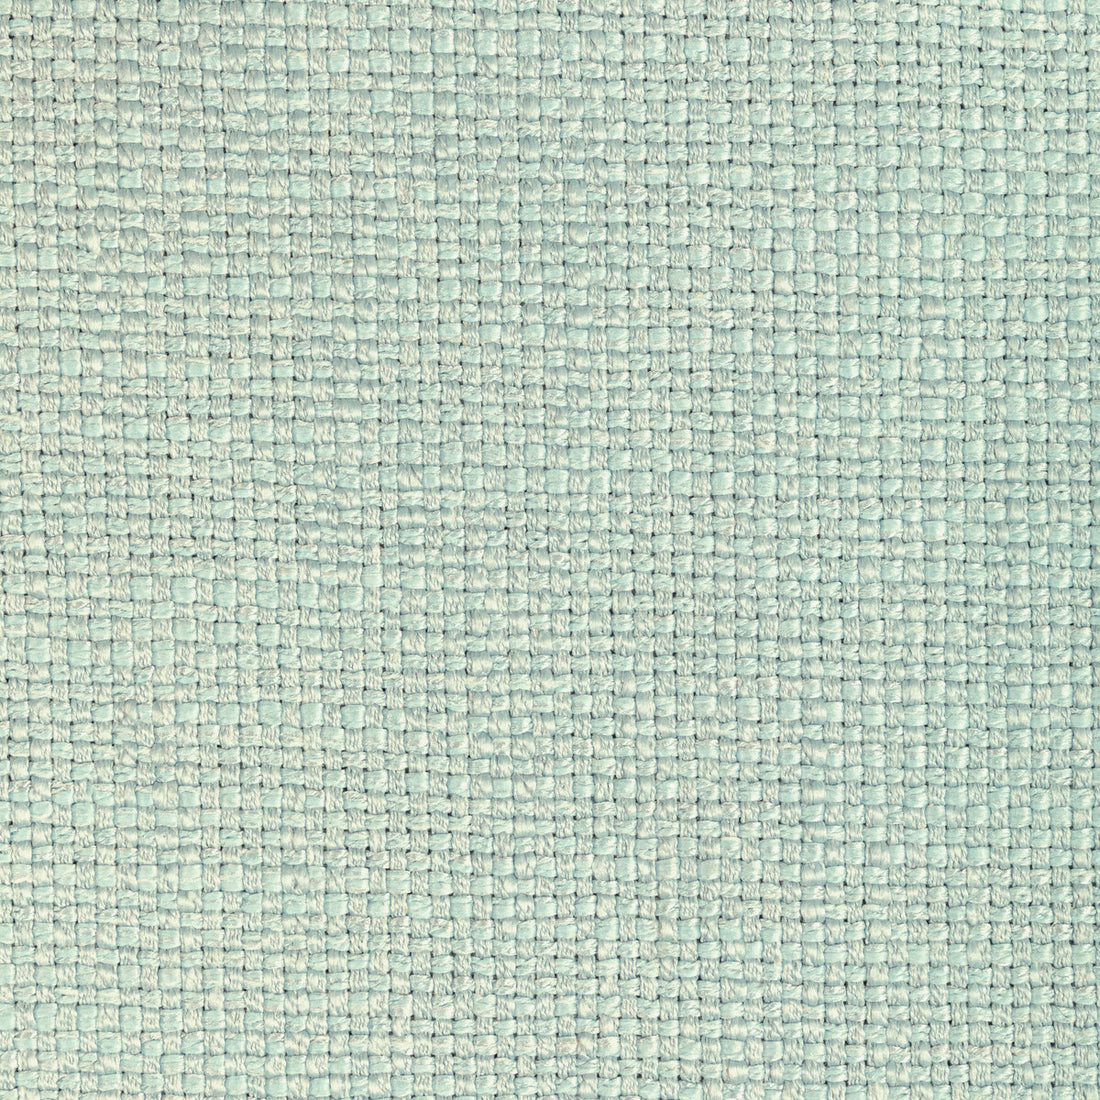 Kravet Design fabric in 36594-113 color - pattern 36594.113.0 - by Kravet Design in the Performance Kravetarmor collection